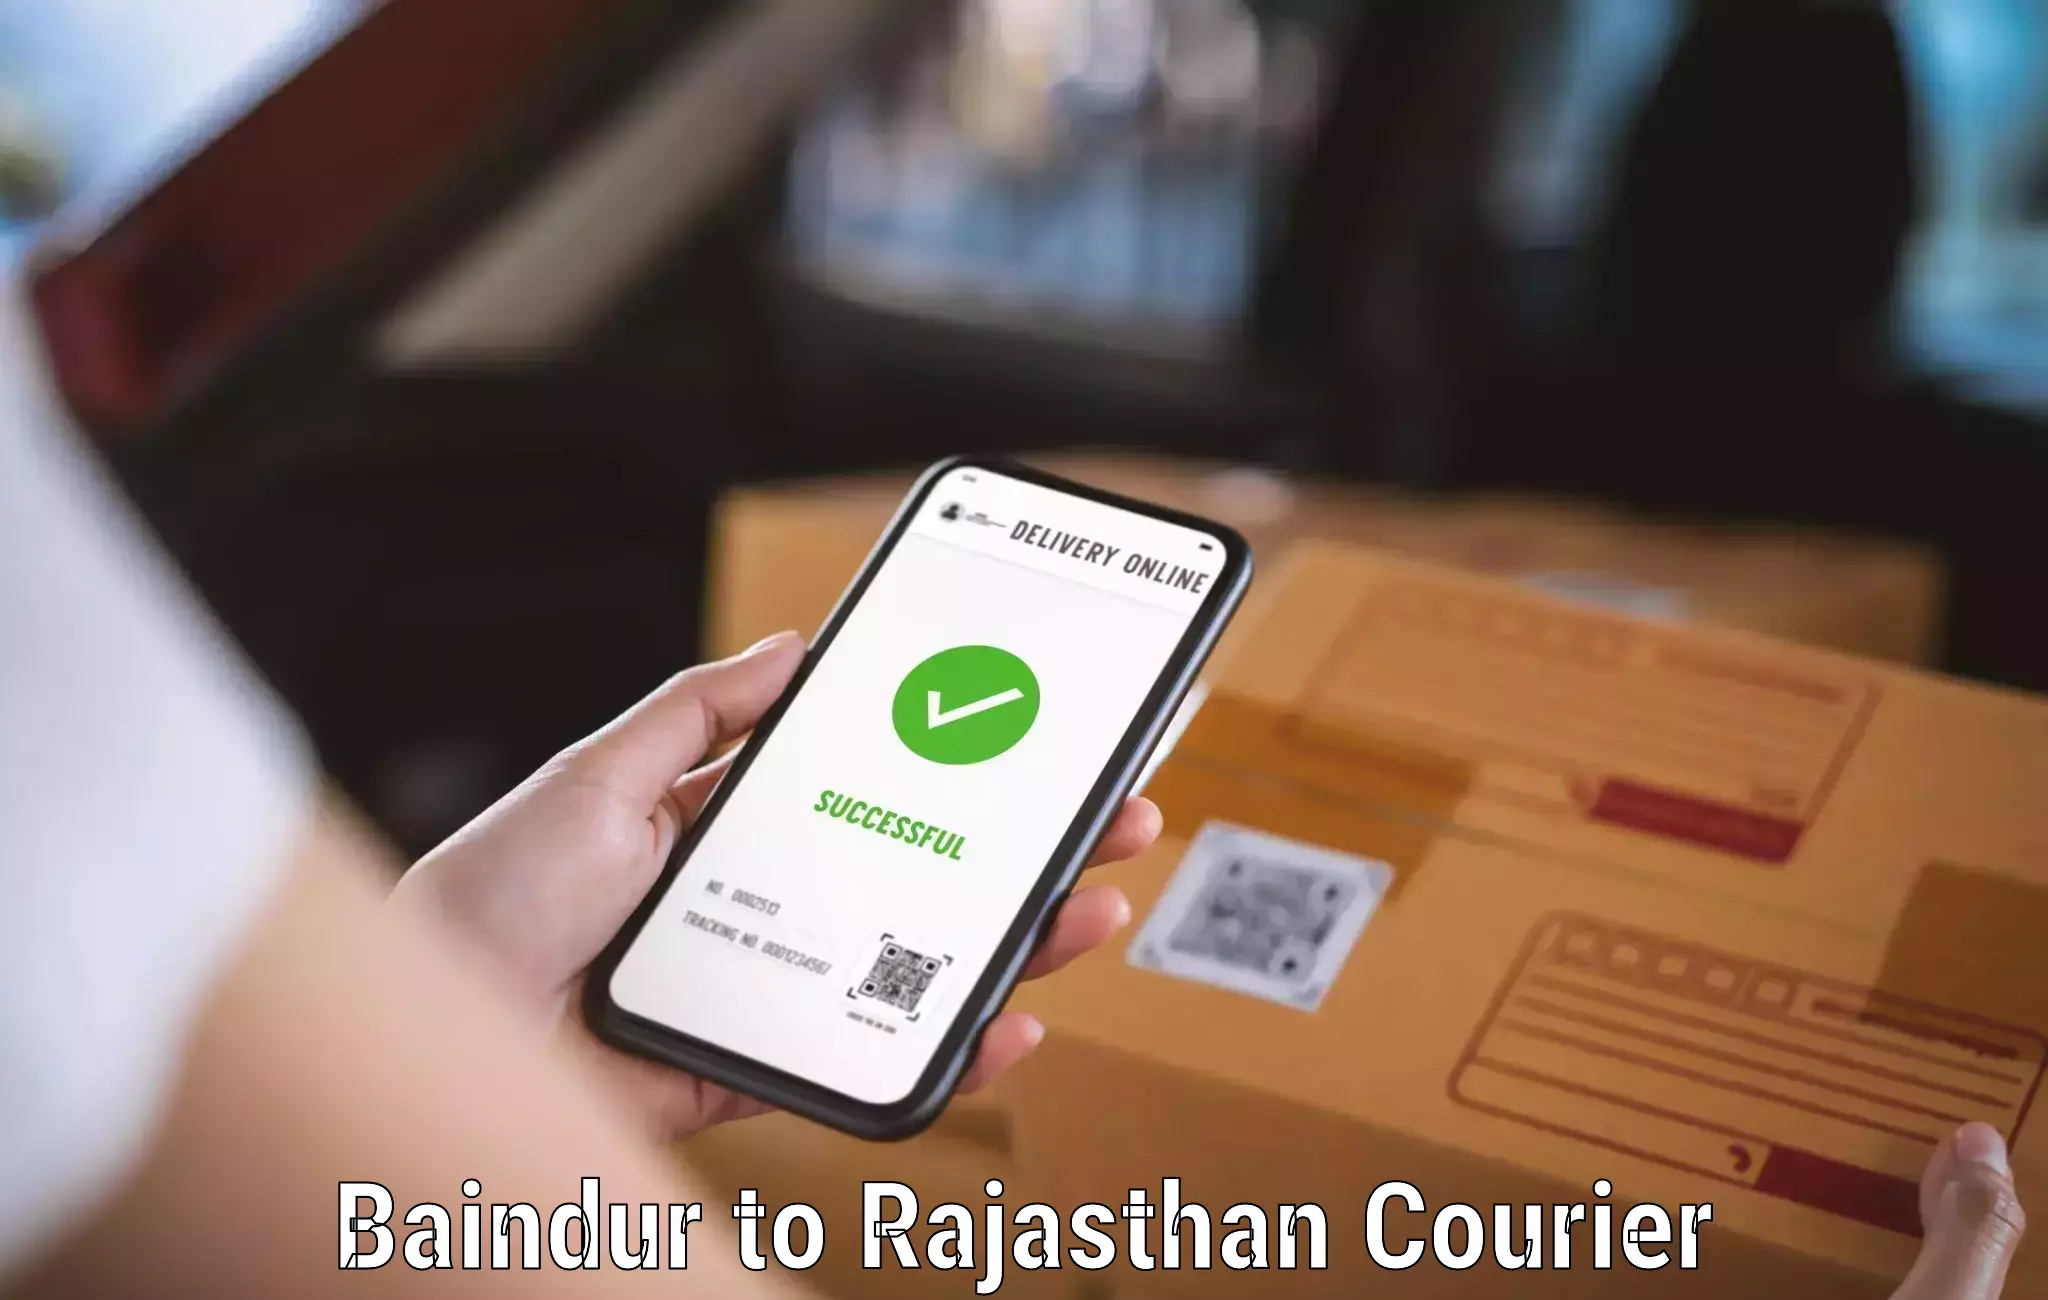 Efficient parcel service Baindur to Yeswanthapur